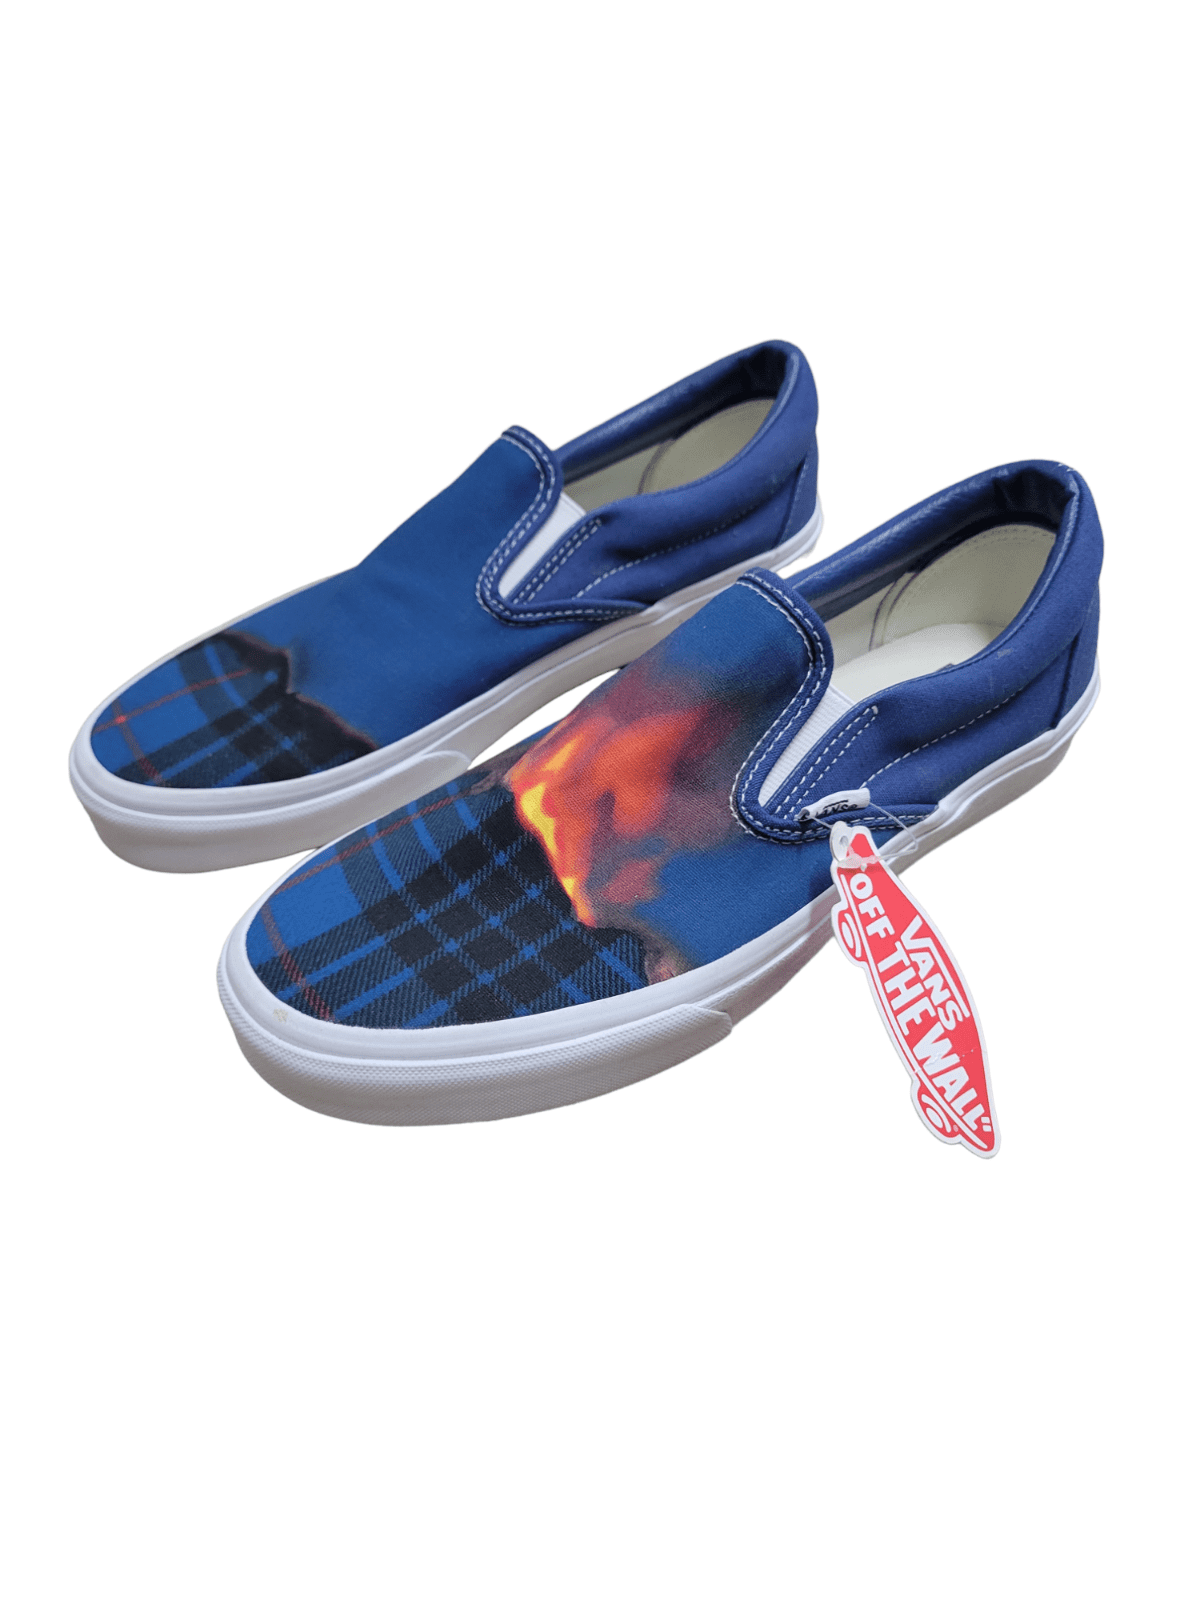 Vans Authentic Prep Retro sneakers in blue/white Size 9.5